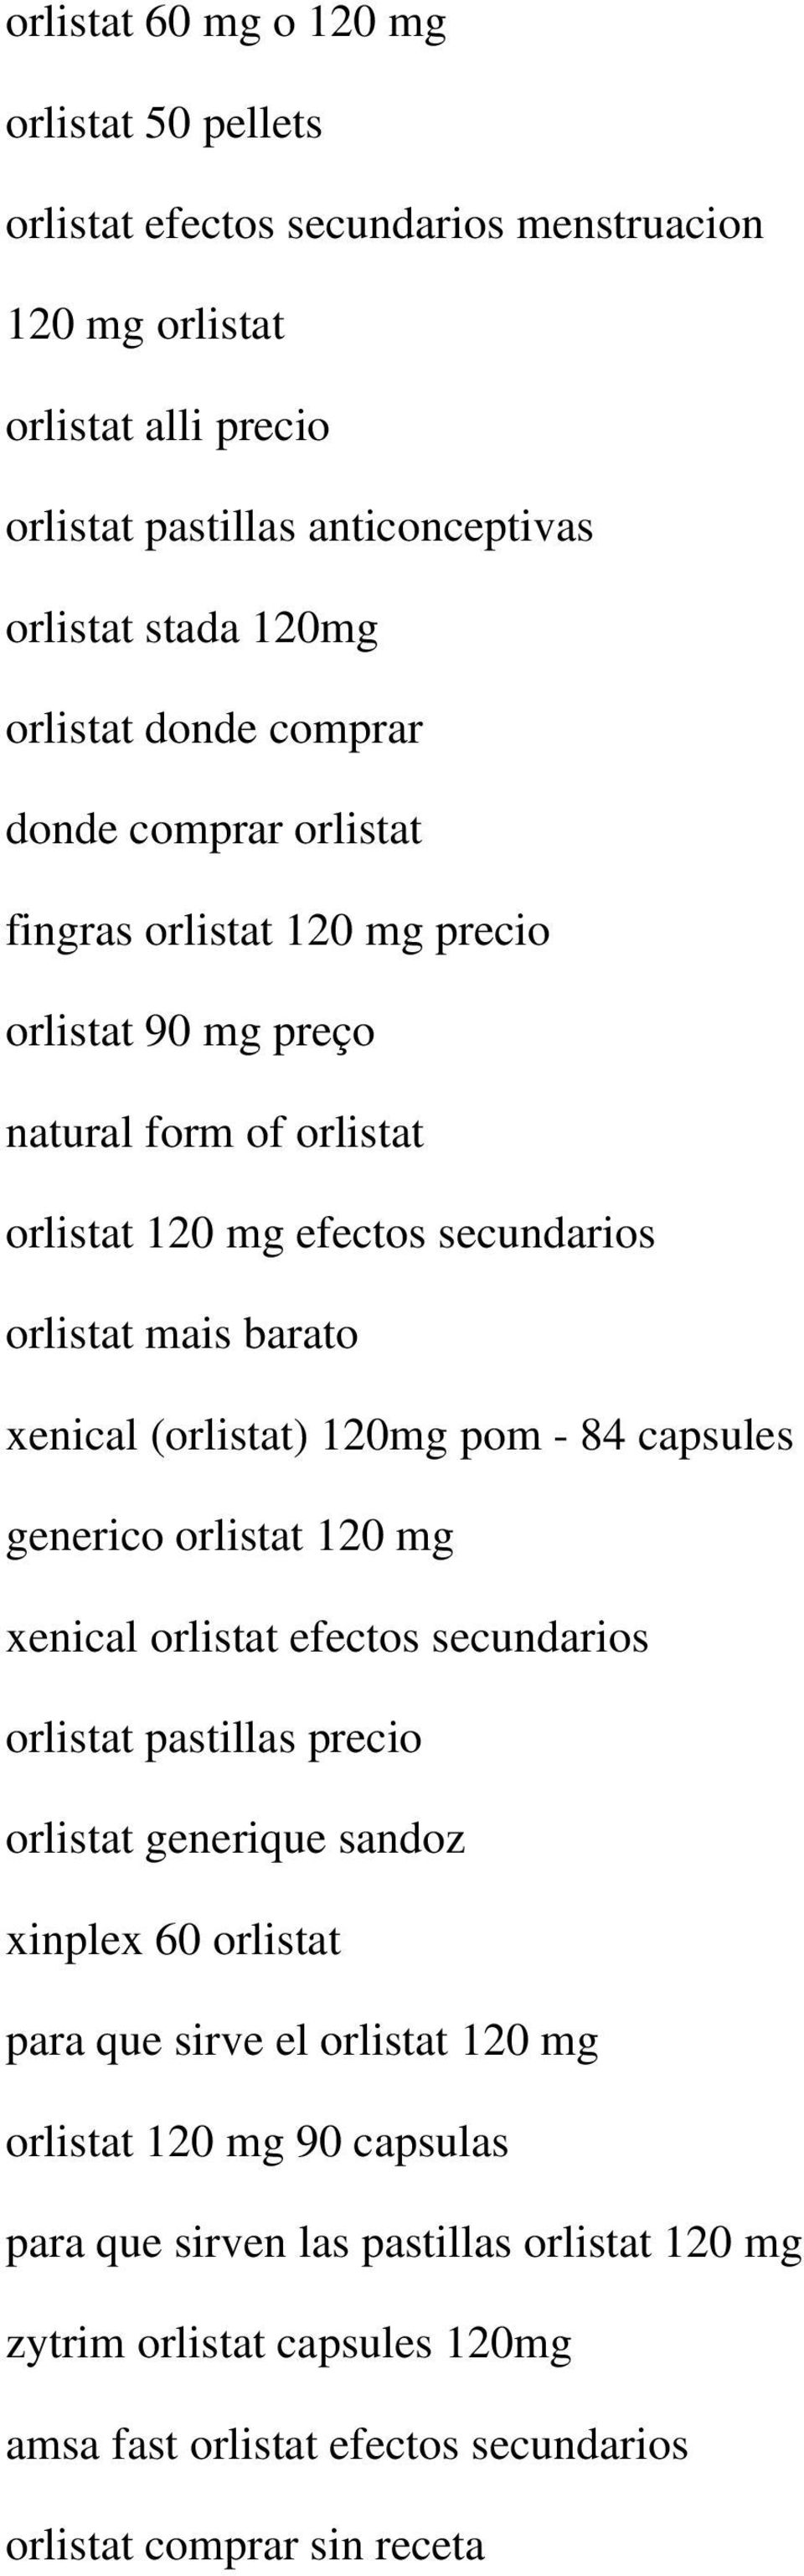 xenical (orlistat) 120mg pom - 84 capsules generico orlistat 120 mg xenical orlistat efectos secundarios orlistat pastillas precio orlistat generique sandoz xinplex 60 orlistat para que